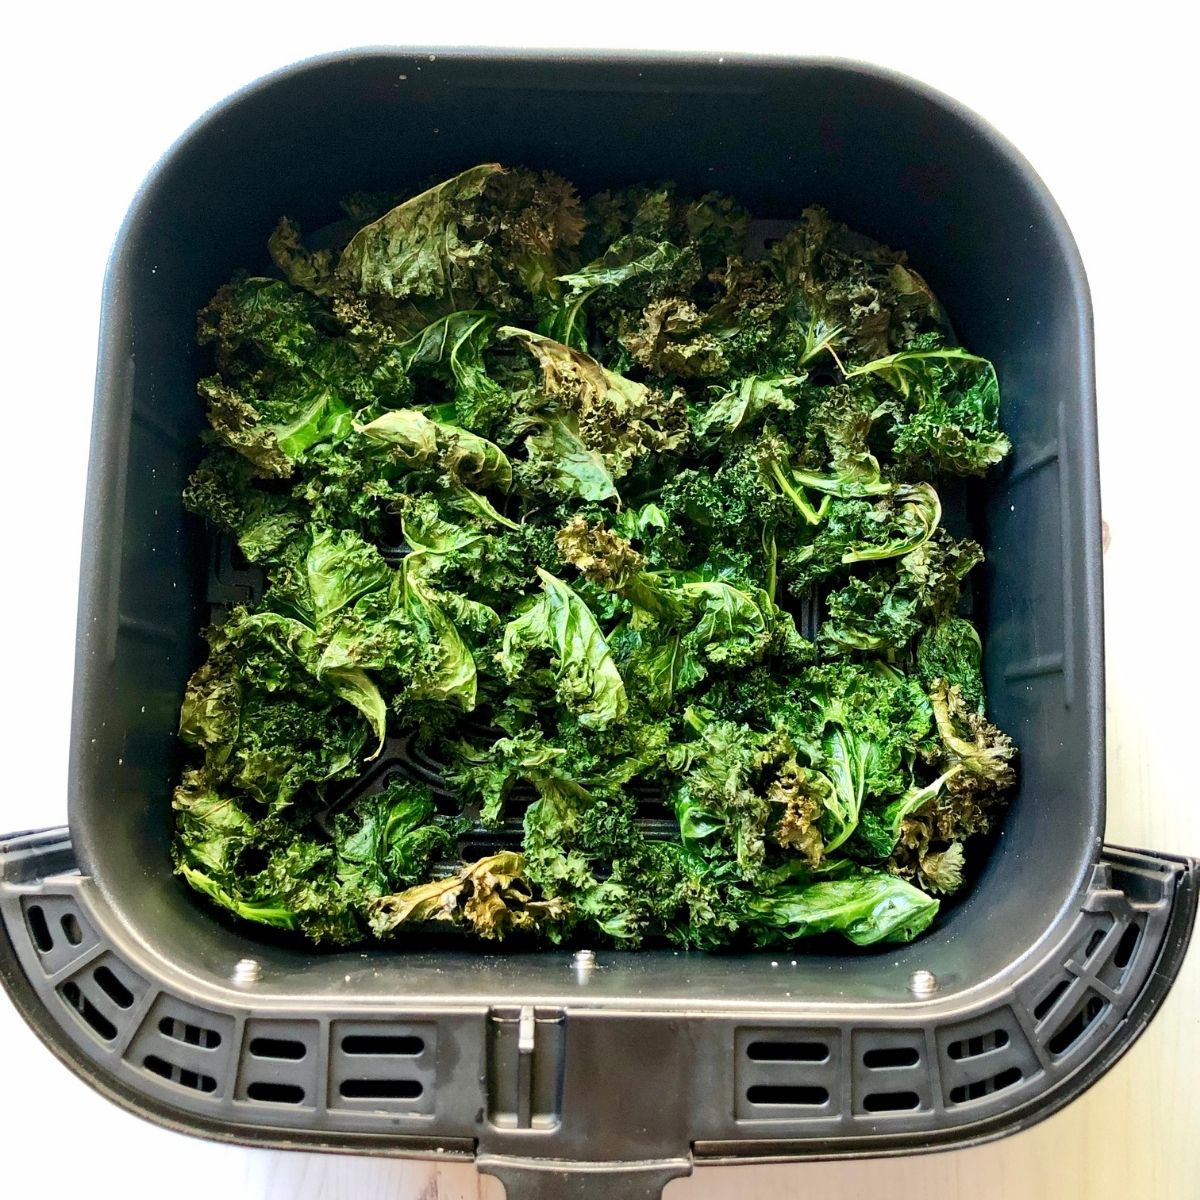 crispy, browned kale chips in an air fryer basket.